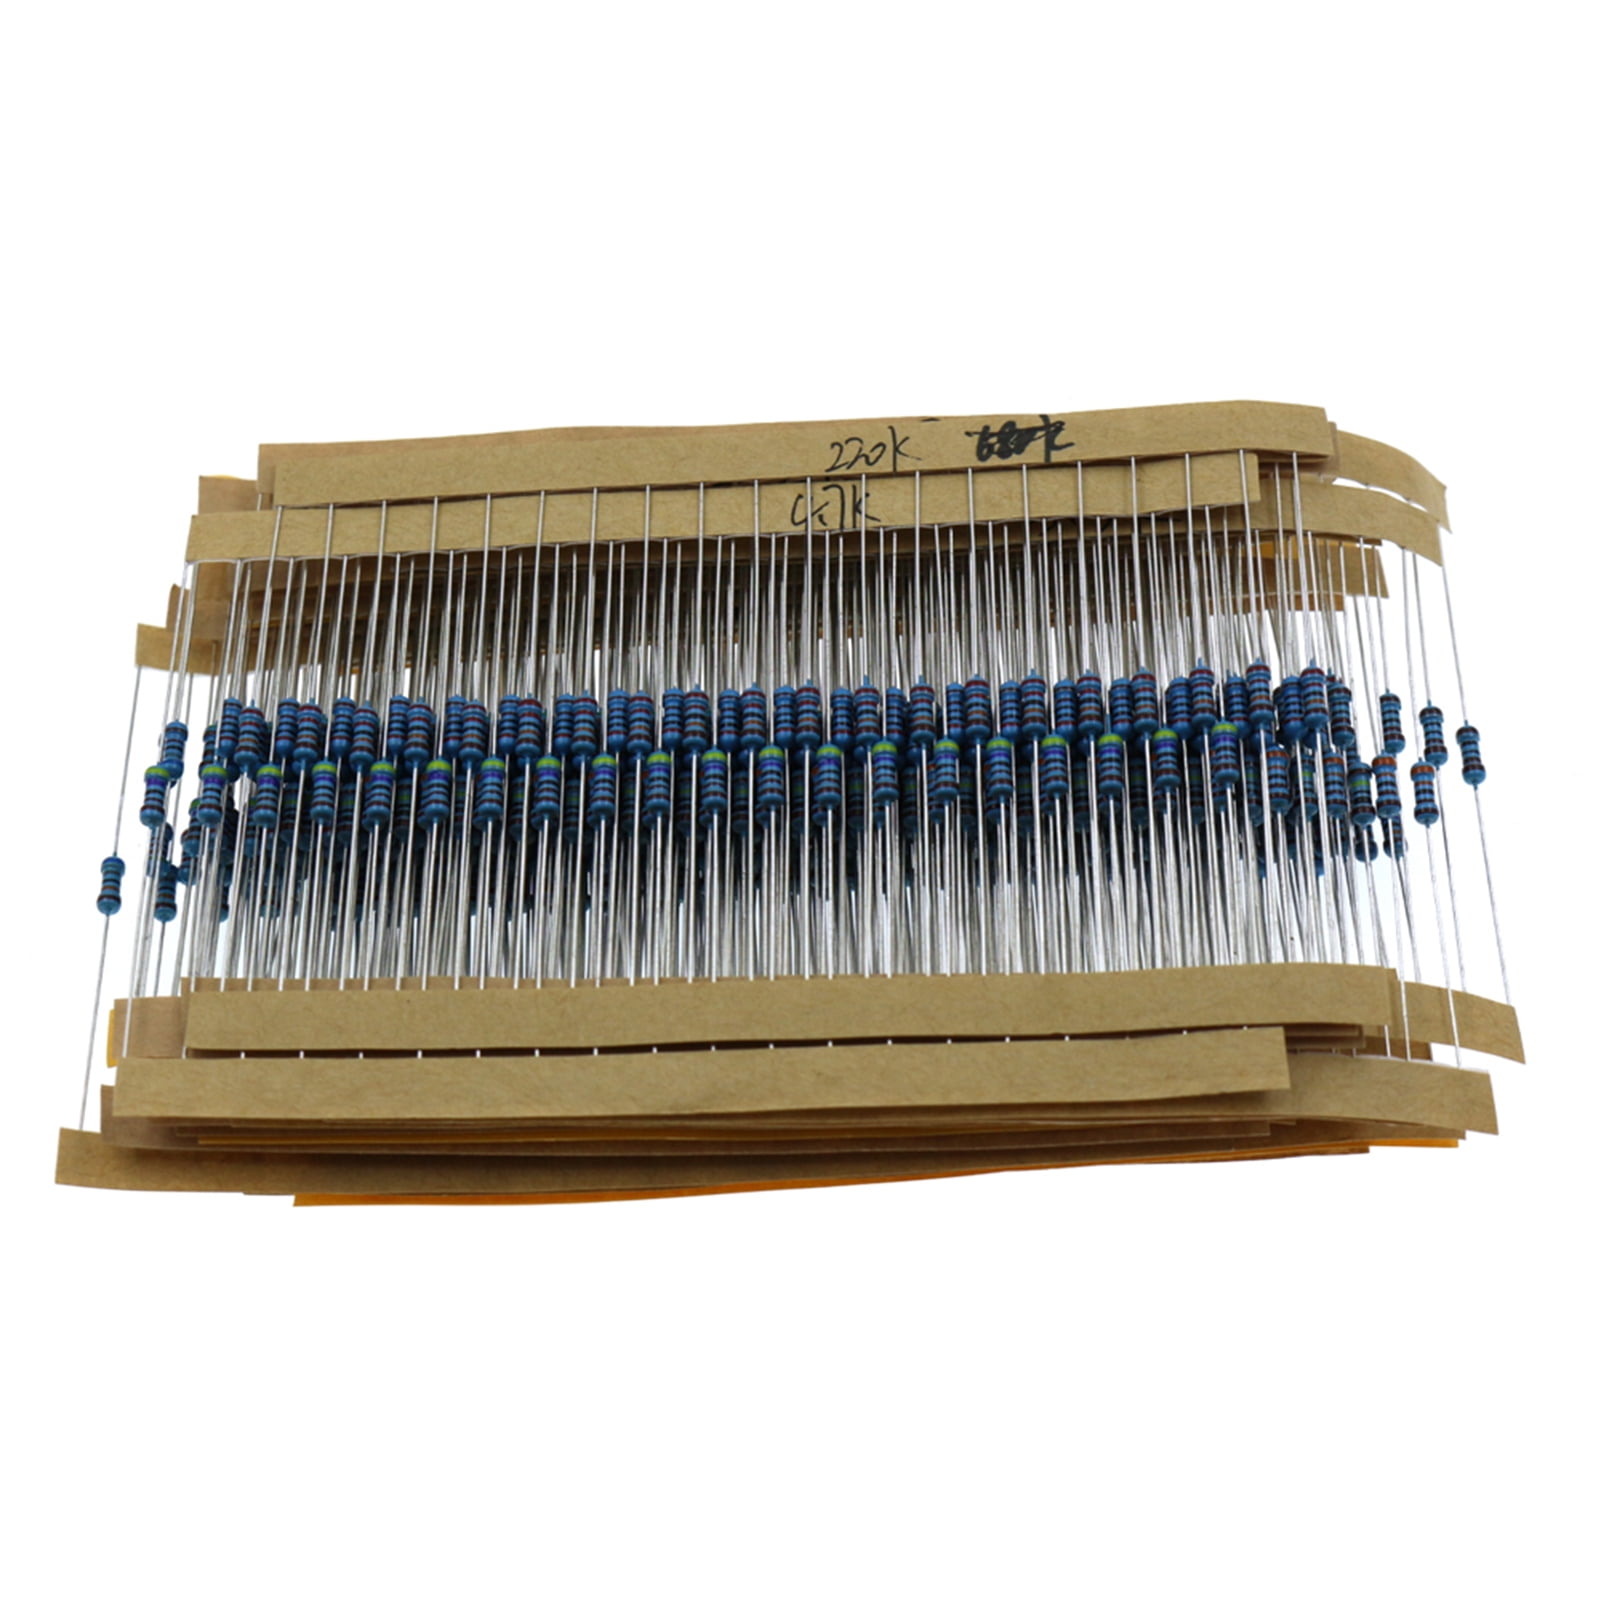 560pcs 56 Types Values 1% 1 1ohm-10Mohm 4W Metal Film Resistor Electronic Assorted Resistance Components Kit Resistors